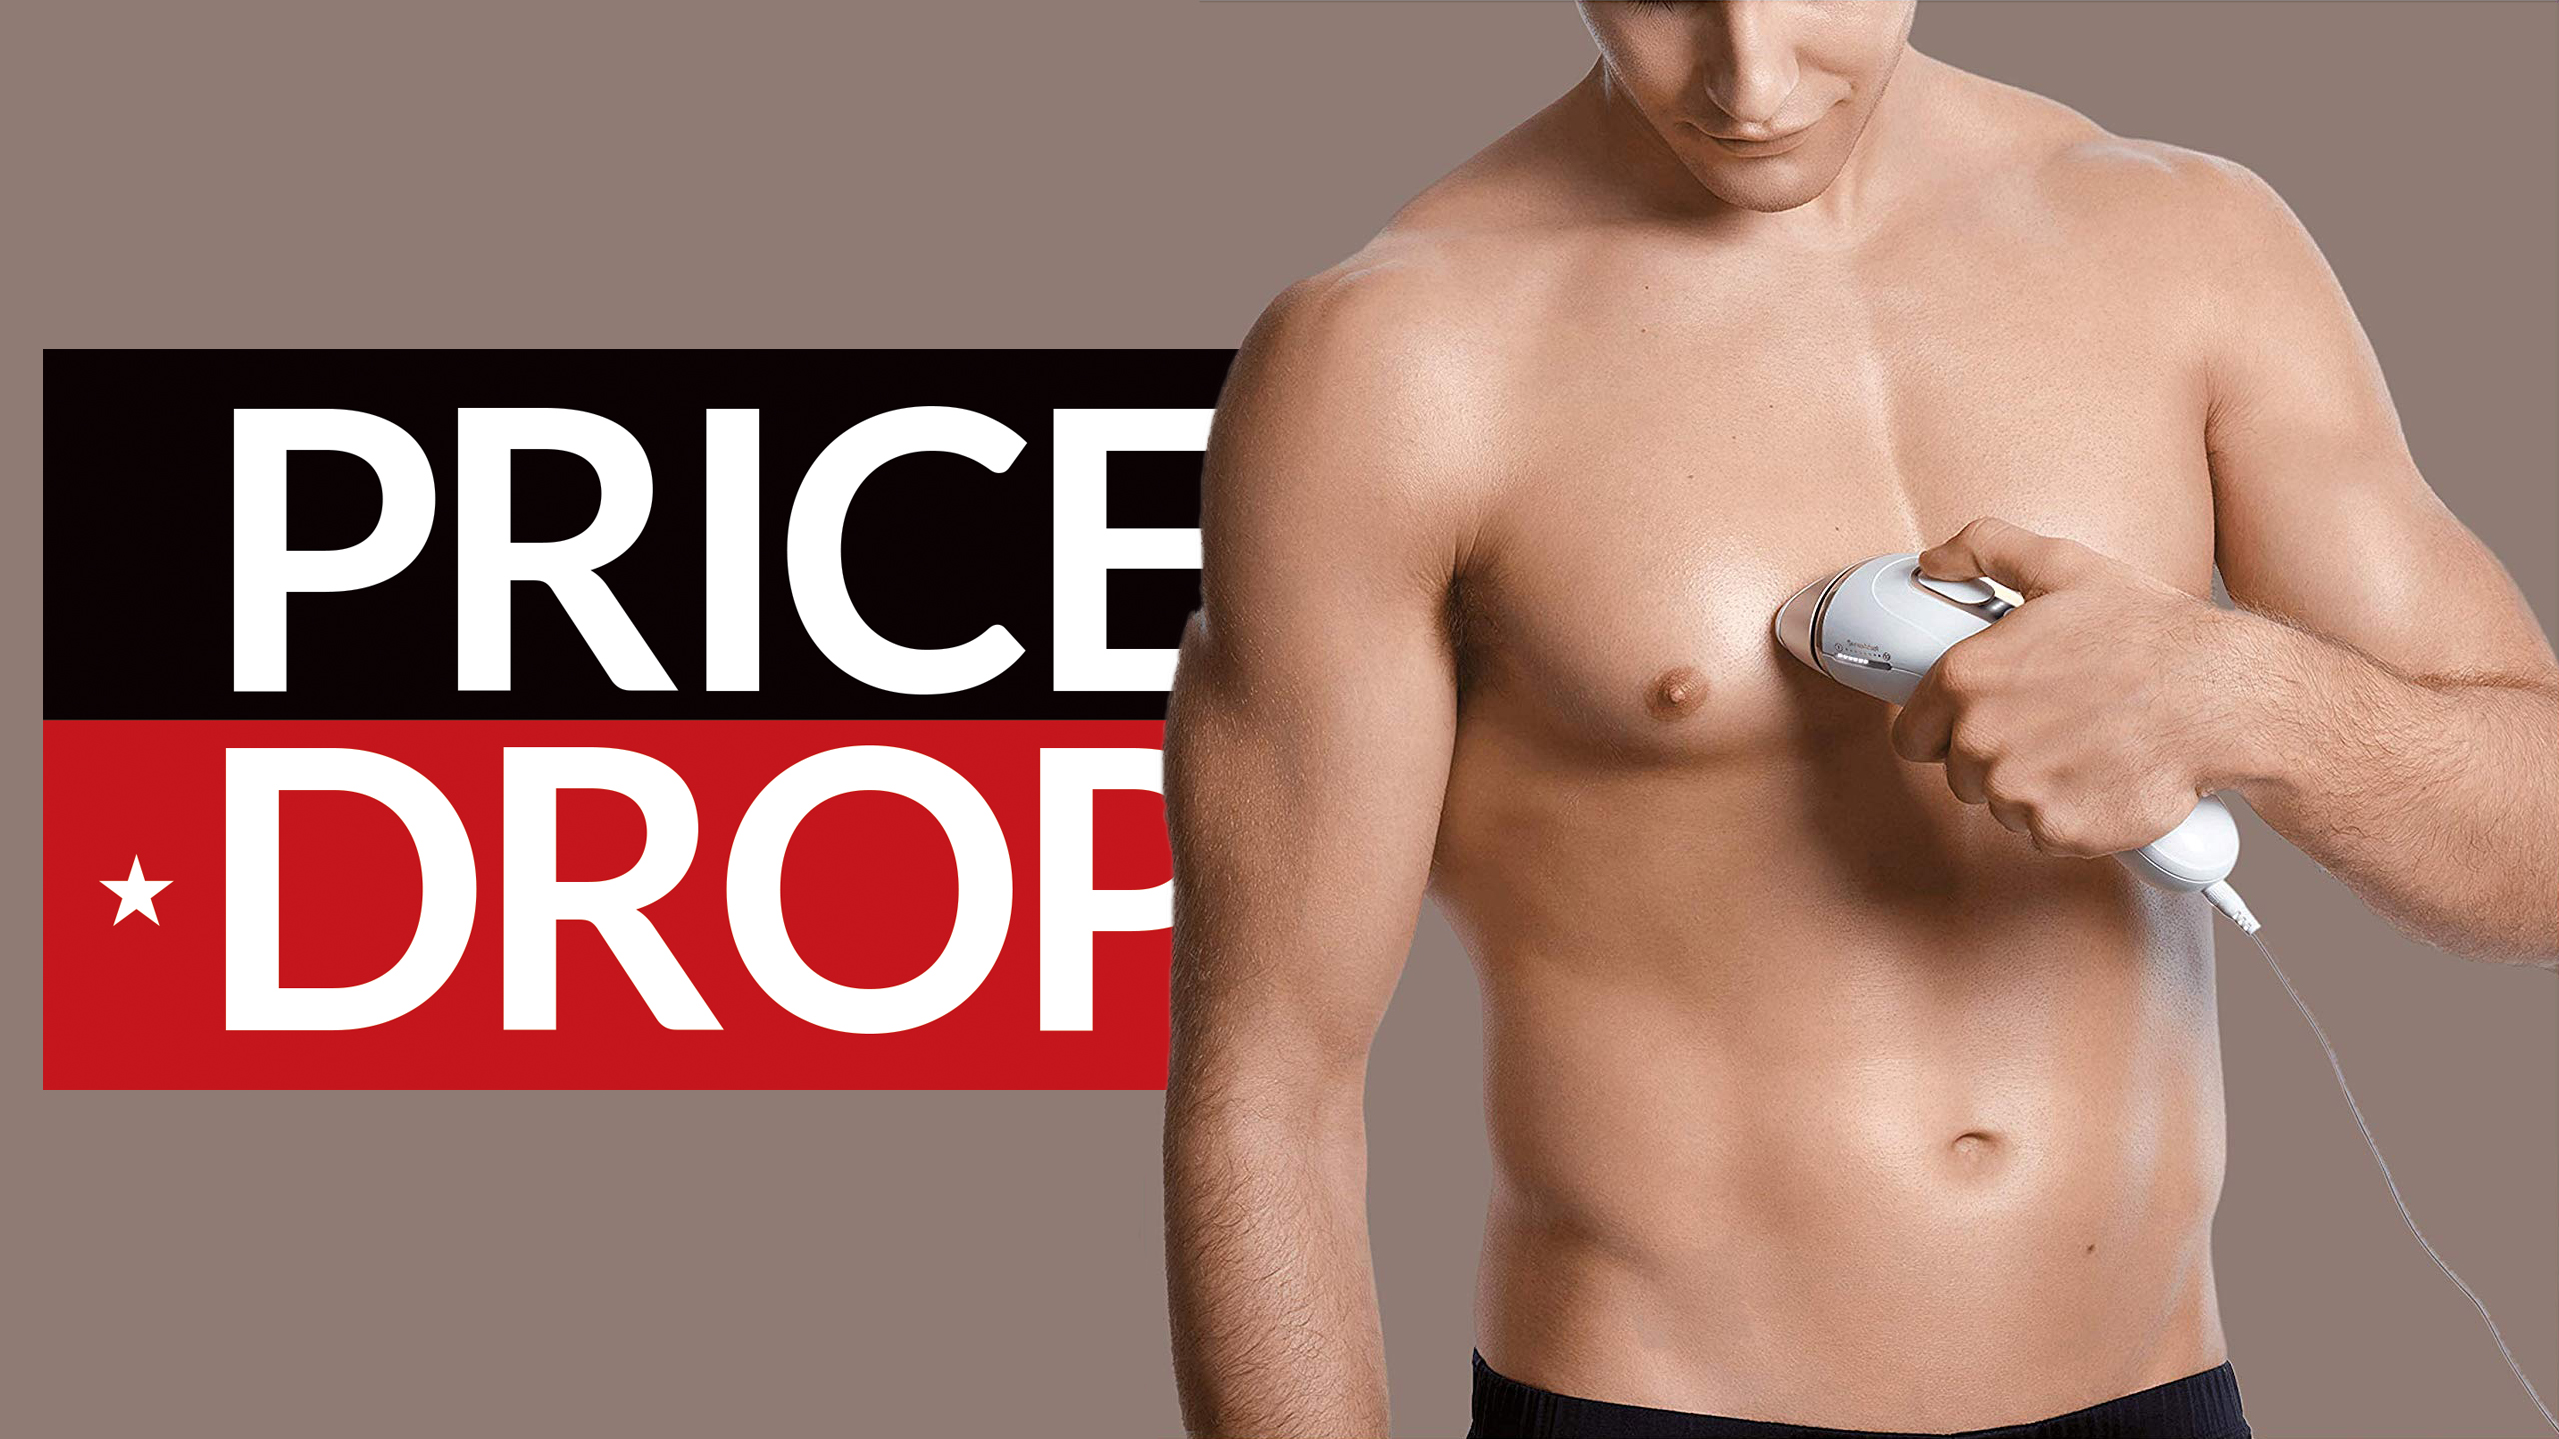 Braun IPL Silk Expert Pro 5 laser hair removal machine price drop for Black  Friday | T3